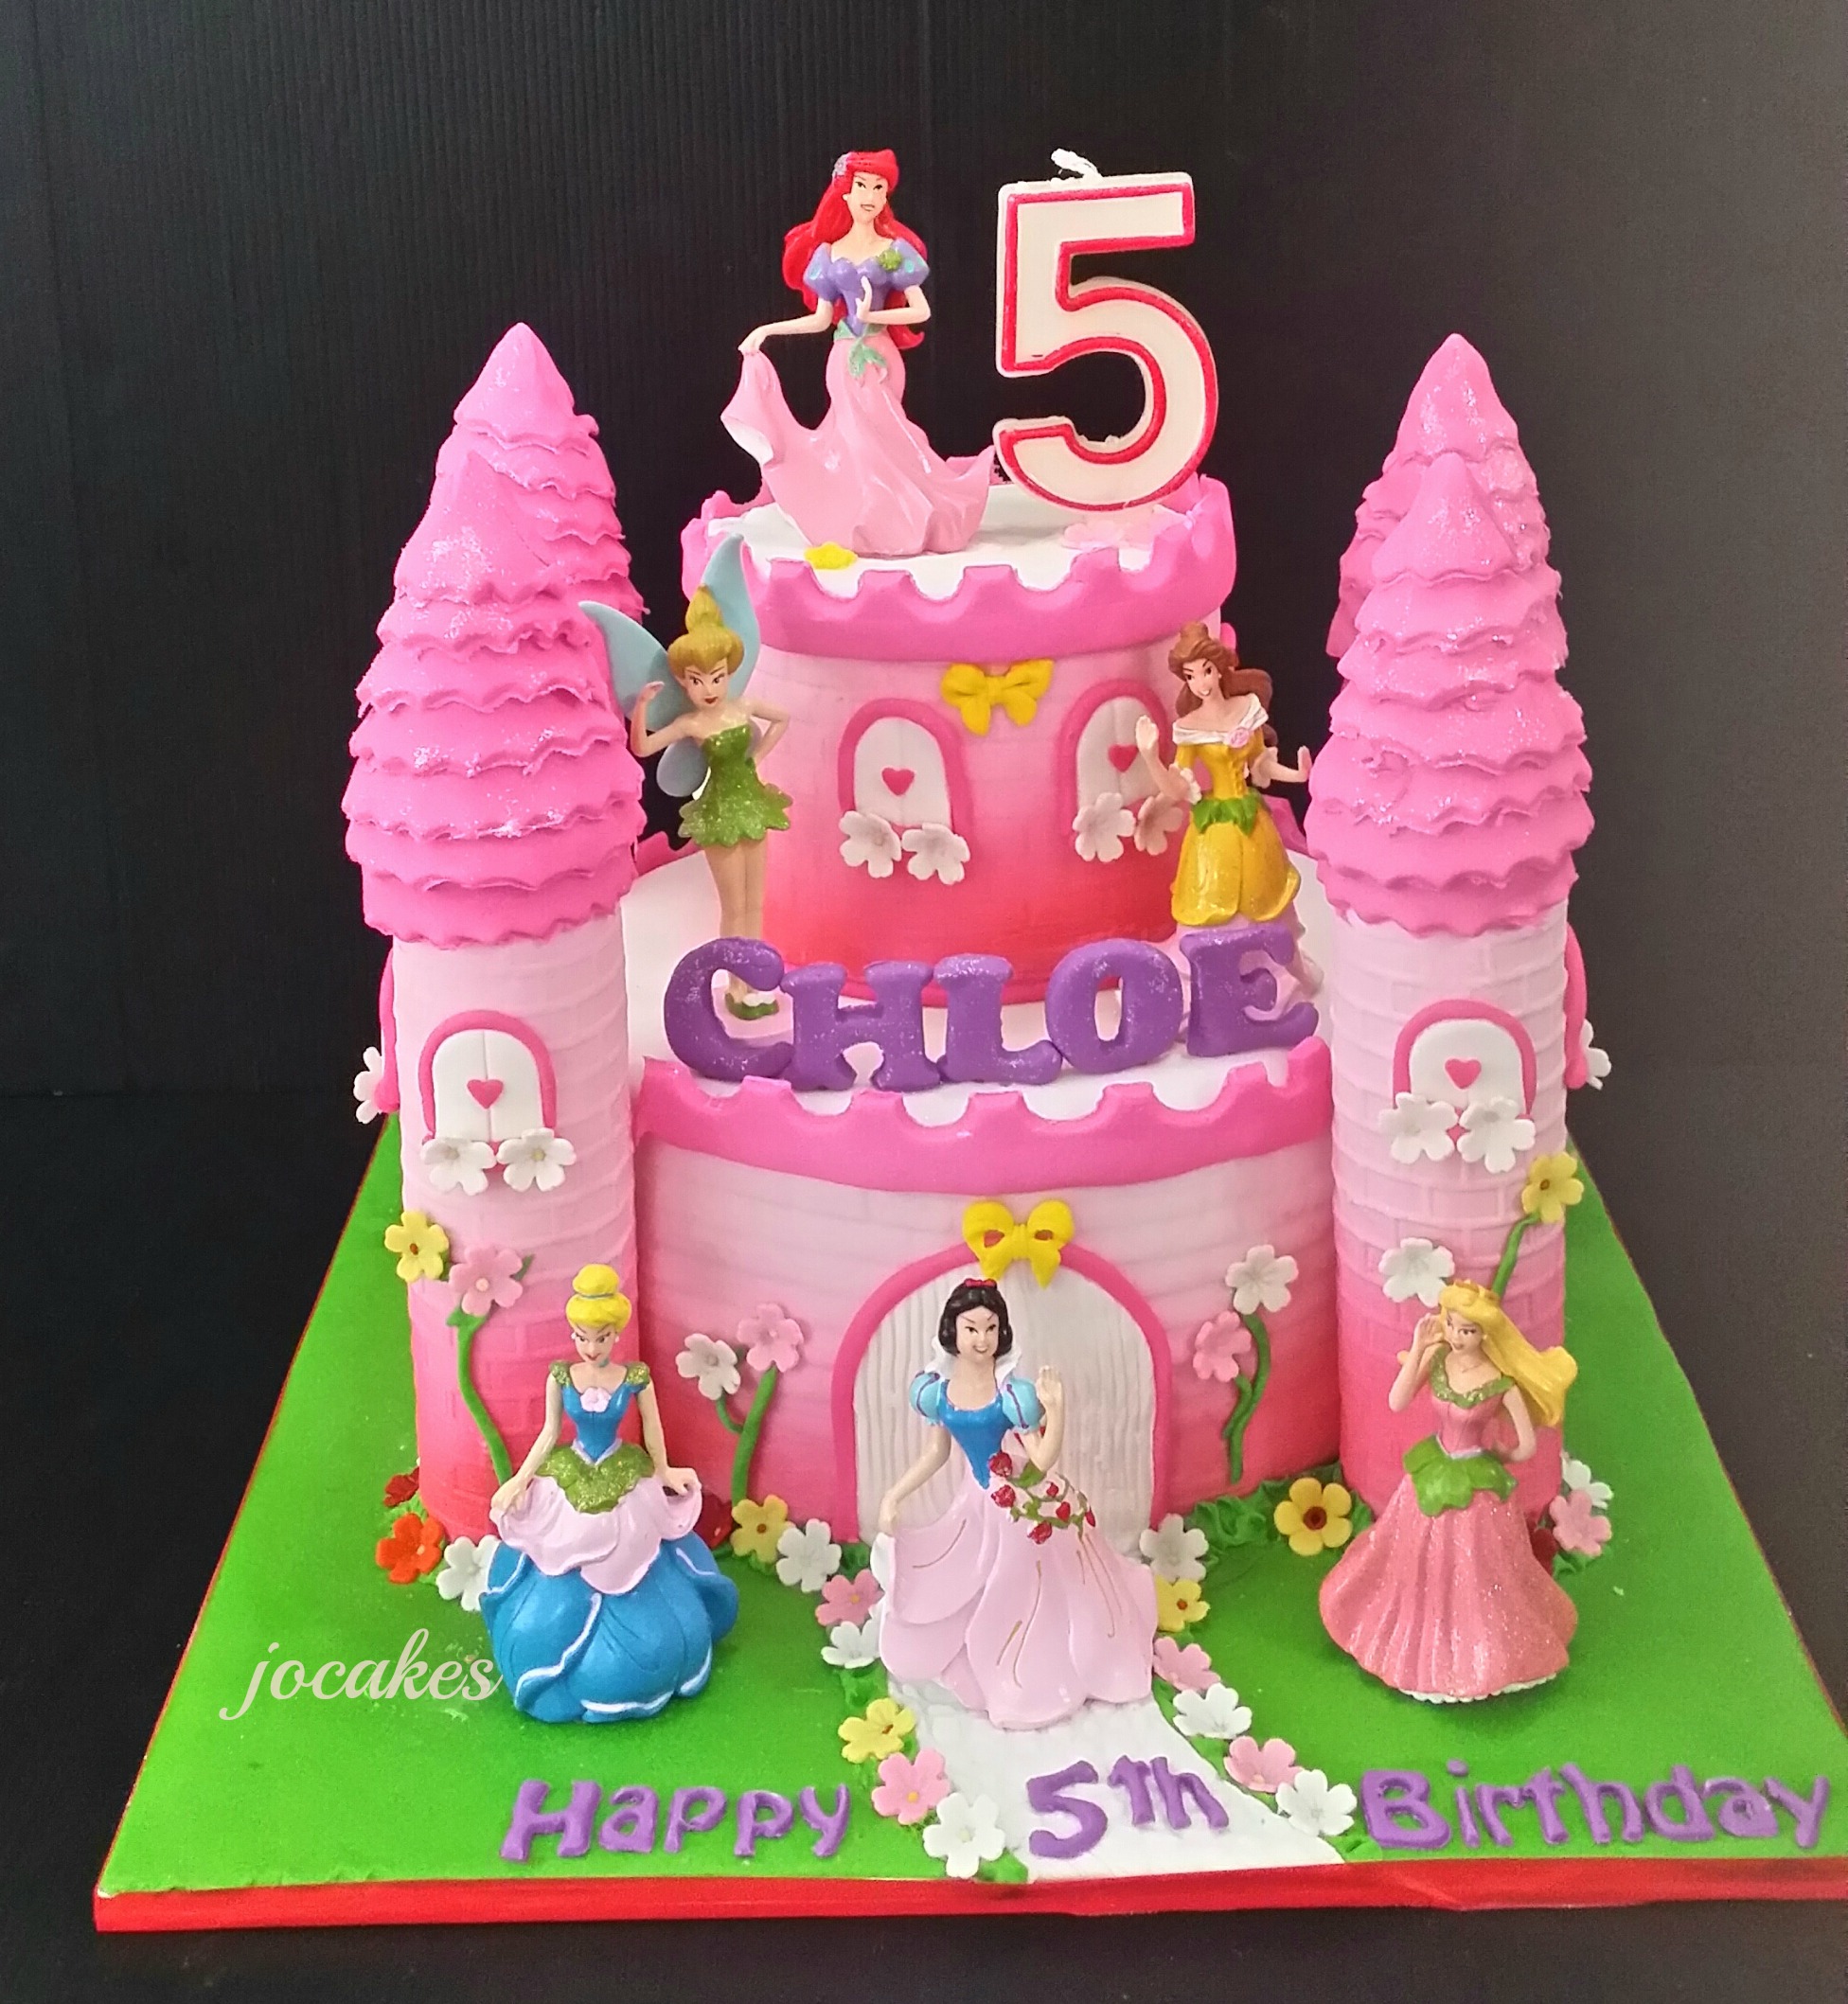 Happy 5th Birthday Cake GIF, Free Download — Download on Funimada.com